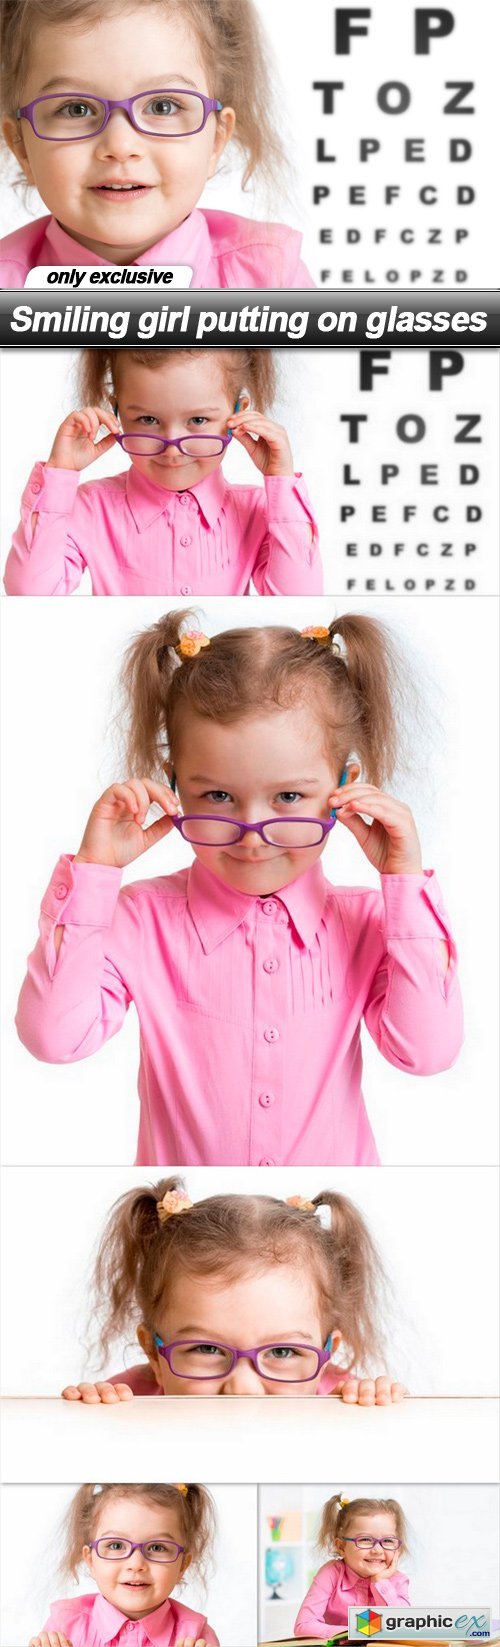 Smiling girl putting on glasses - 6 UHQ JPEG